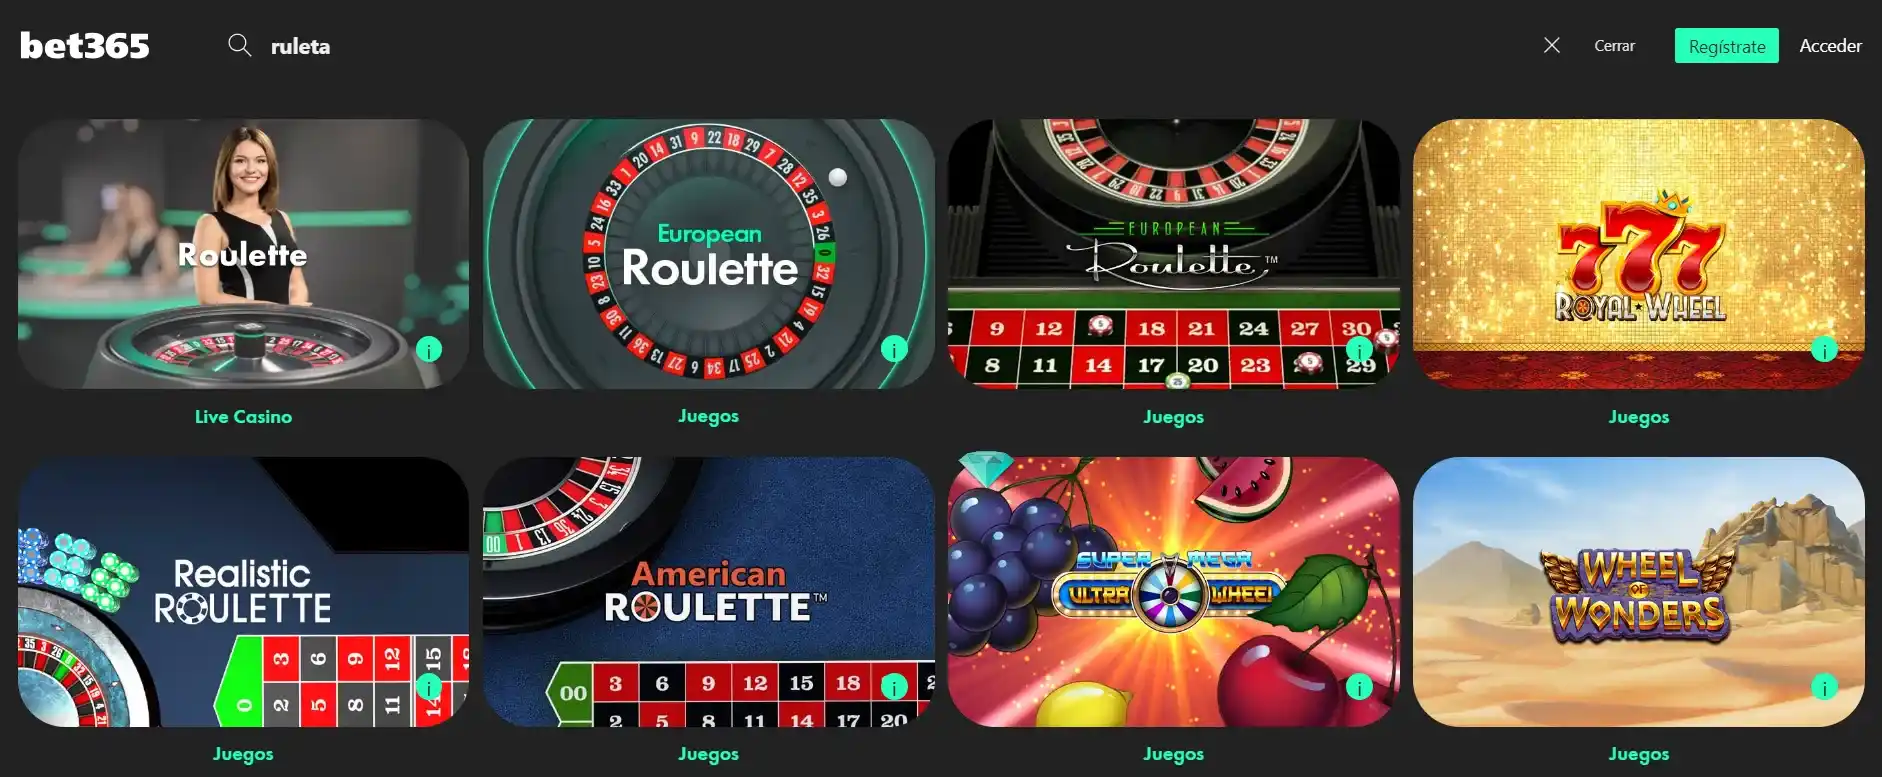 como jugar ruleta casino bet365